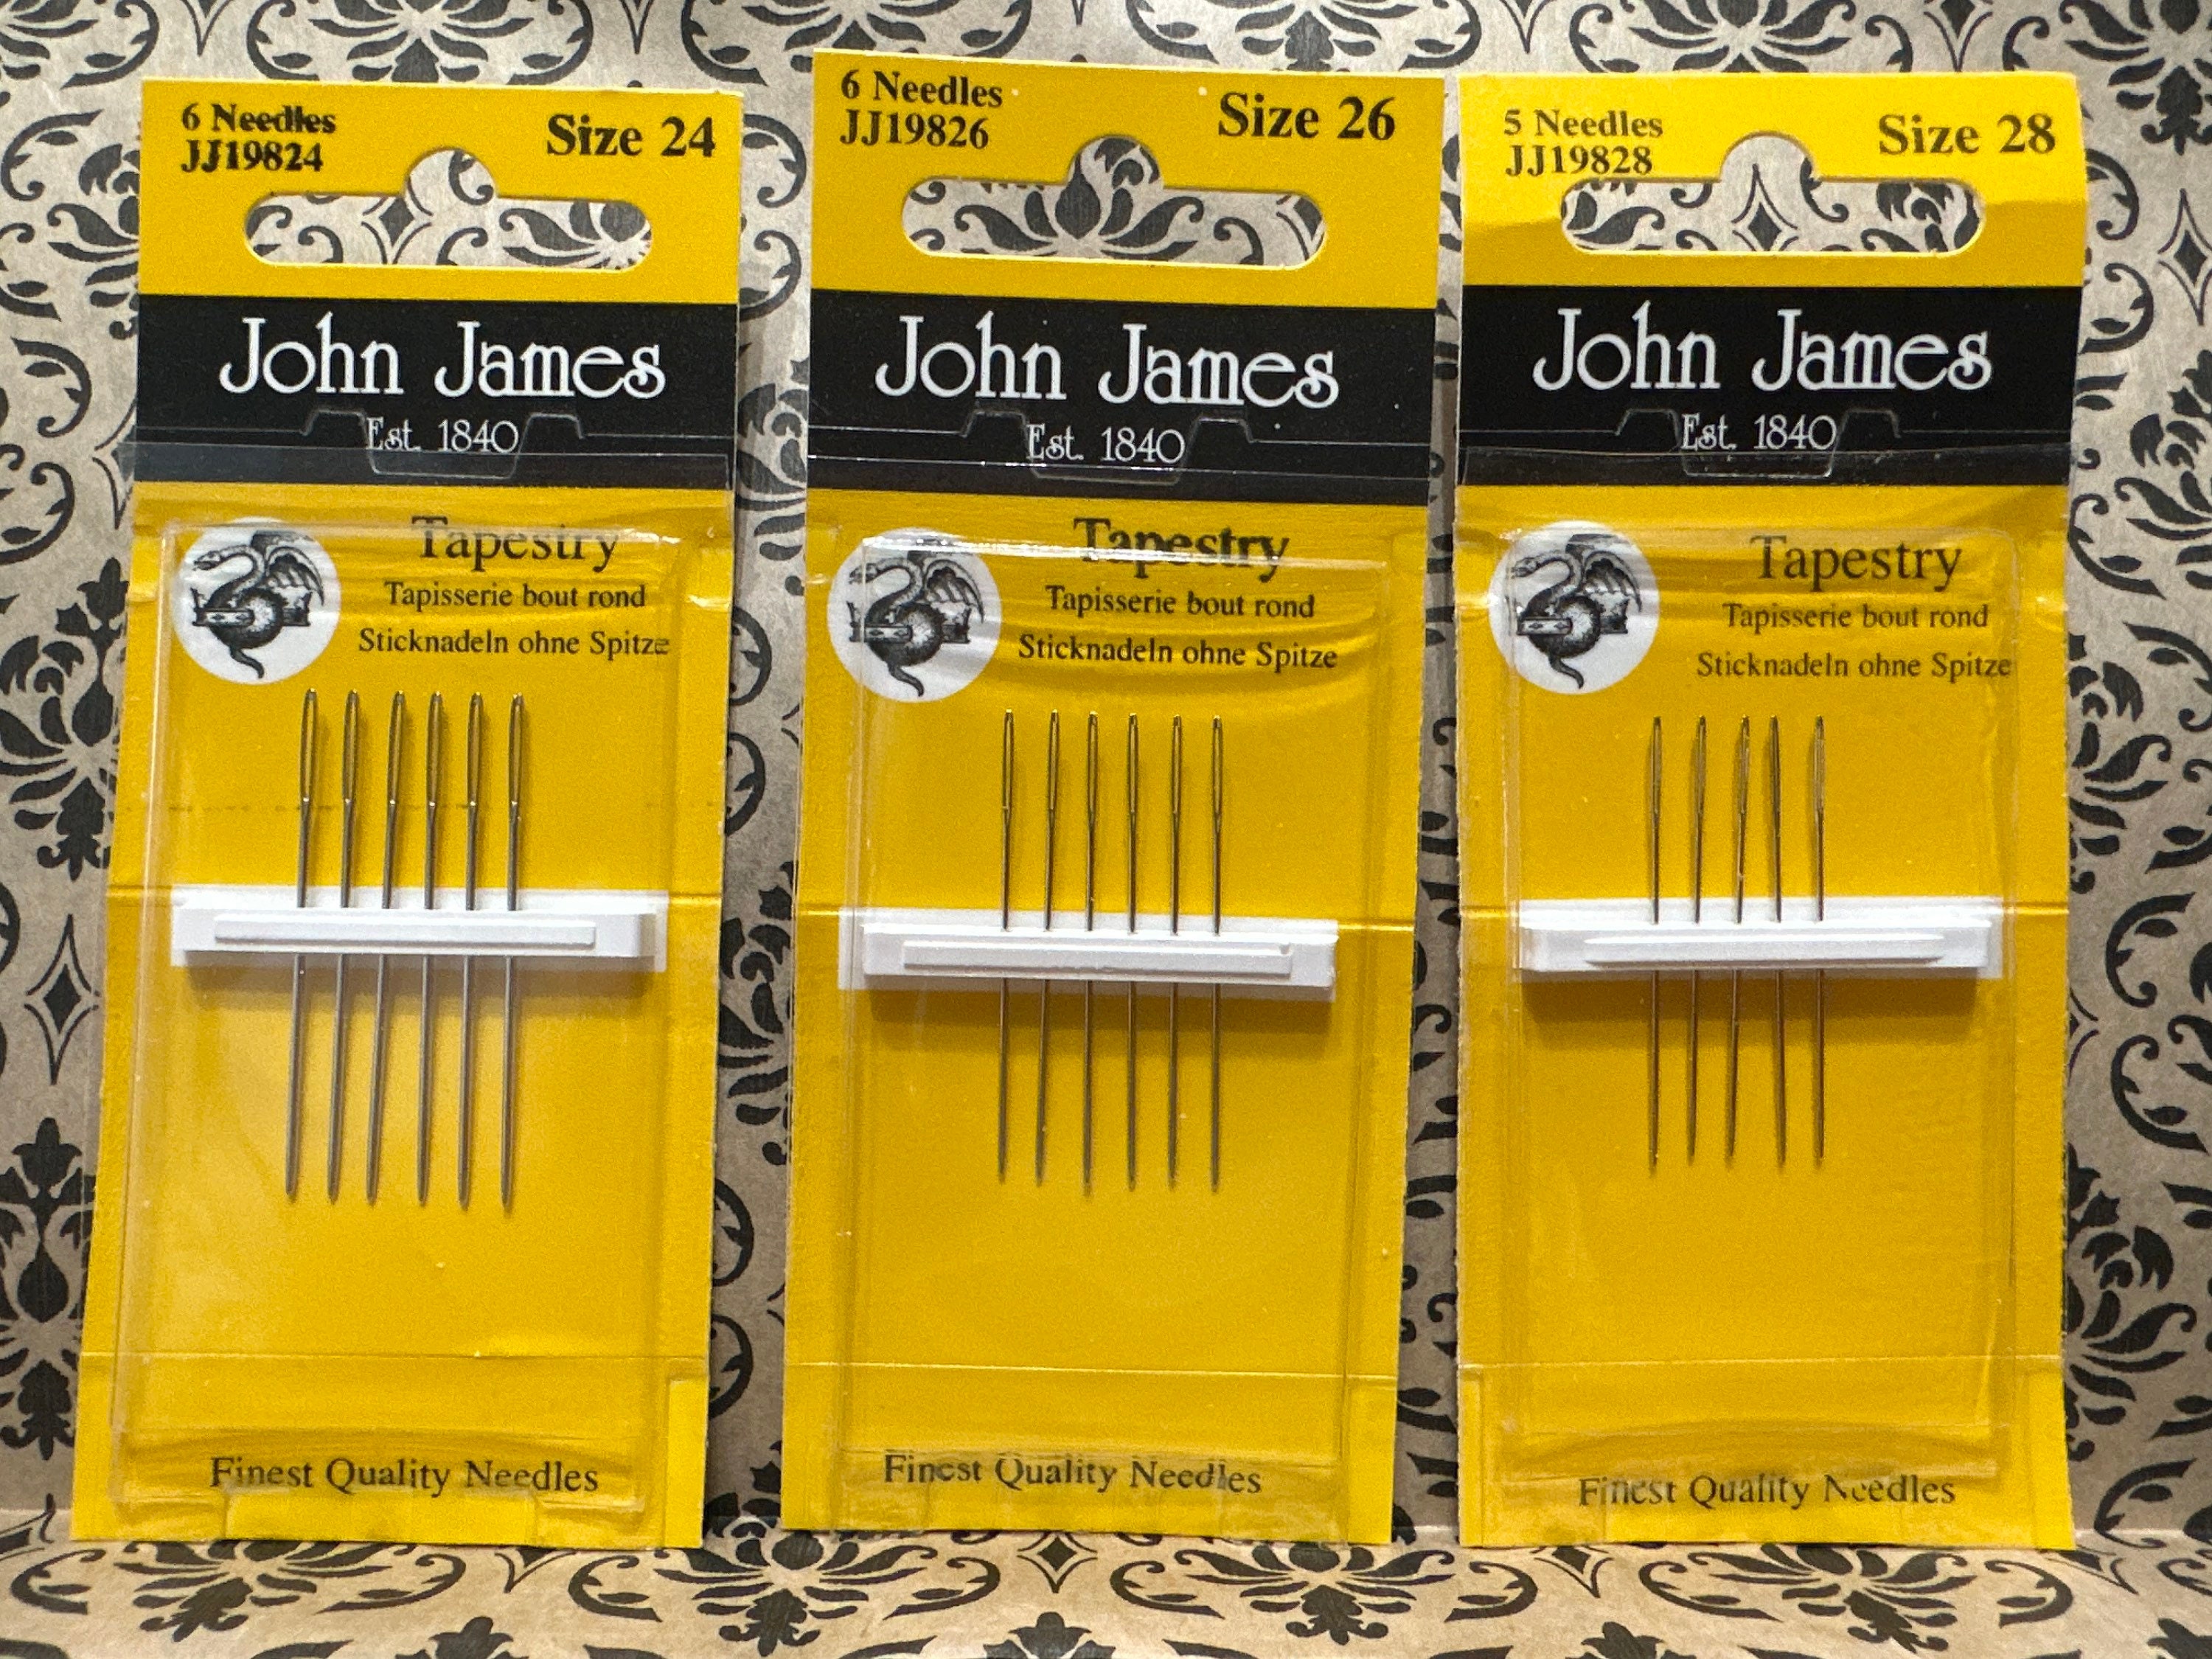 John James Needles - Cross Stitch Needles - Tapestry Needles - Size 22 -  Size 24 - Size 26 - Size 28 - 5 Needles per pack - 6 needles / pack